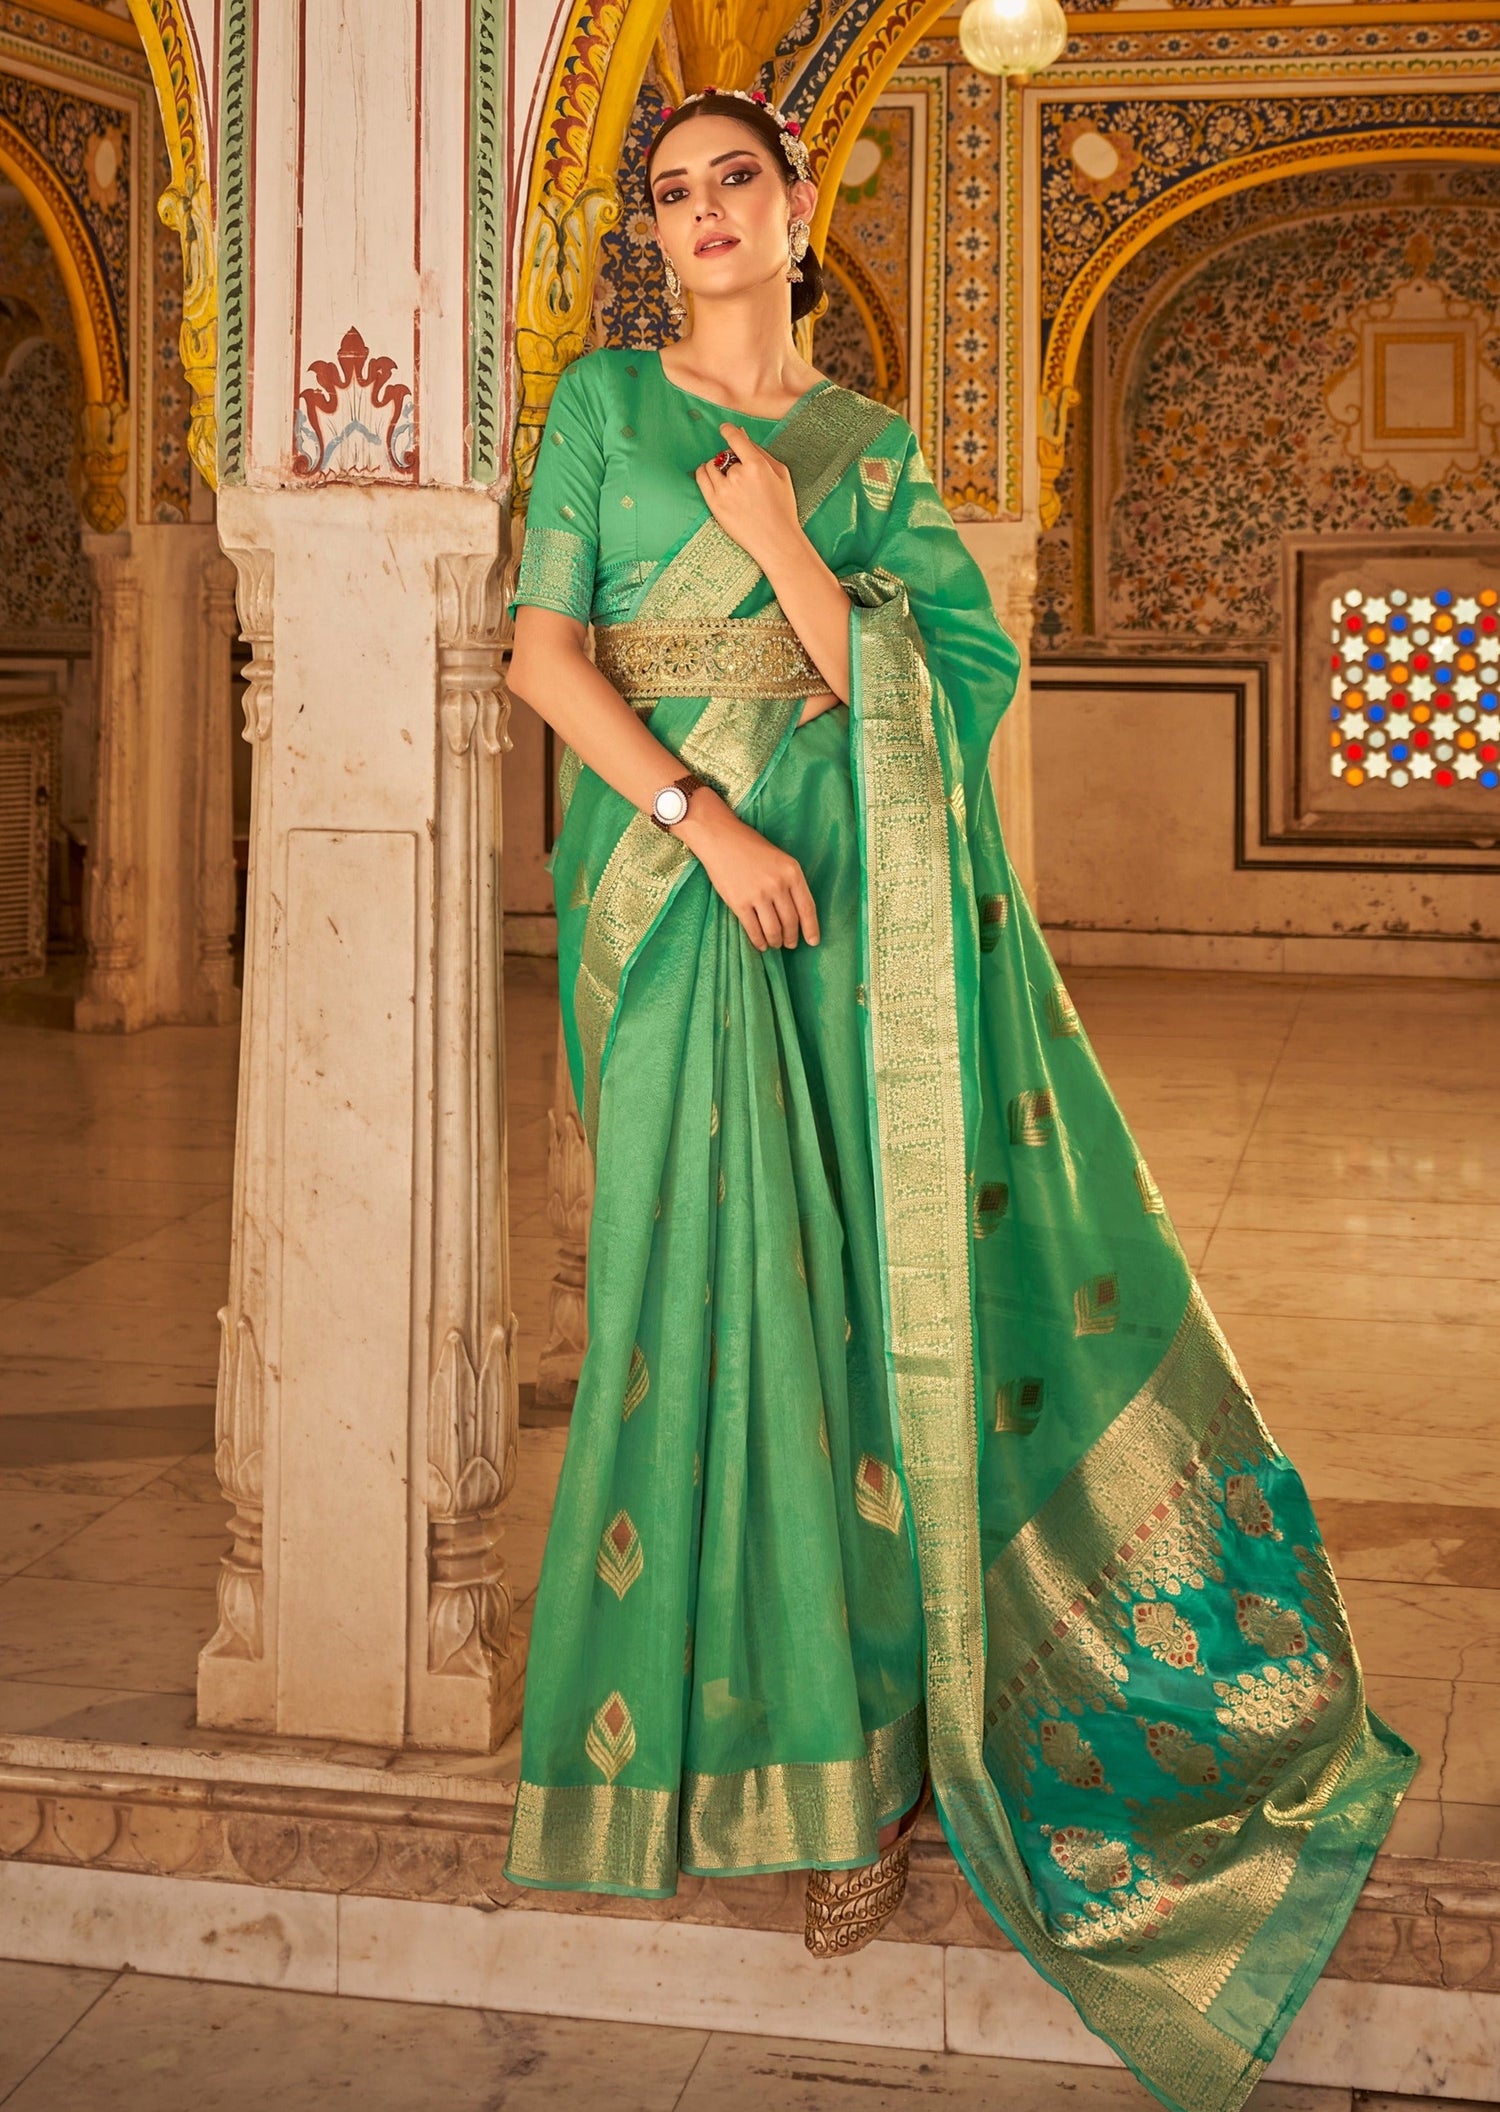 Banarasi tissue silk handloom saree online shopping price for wedding india usa uk uae.